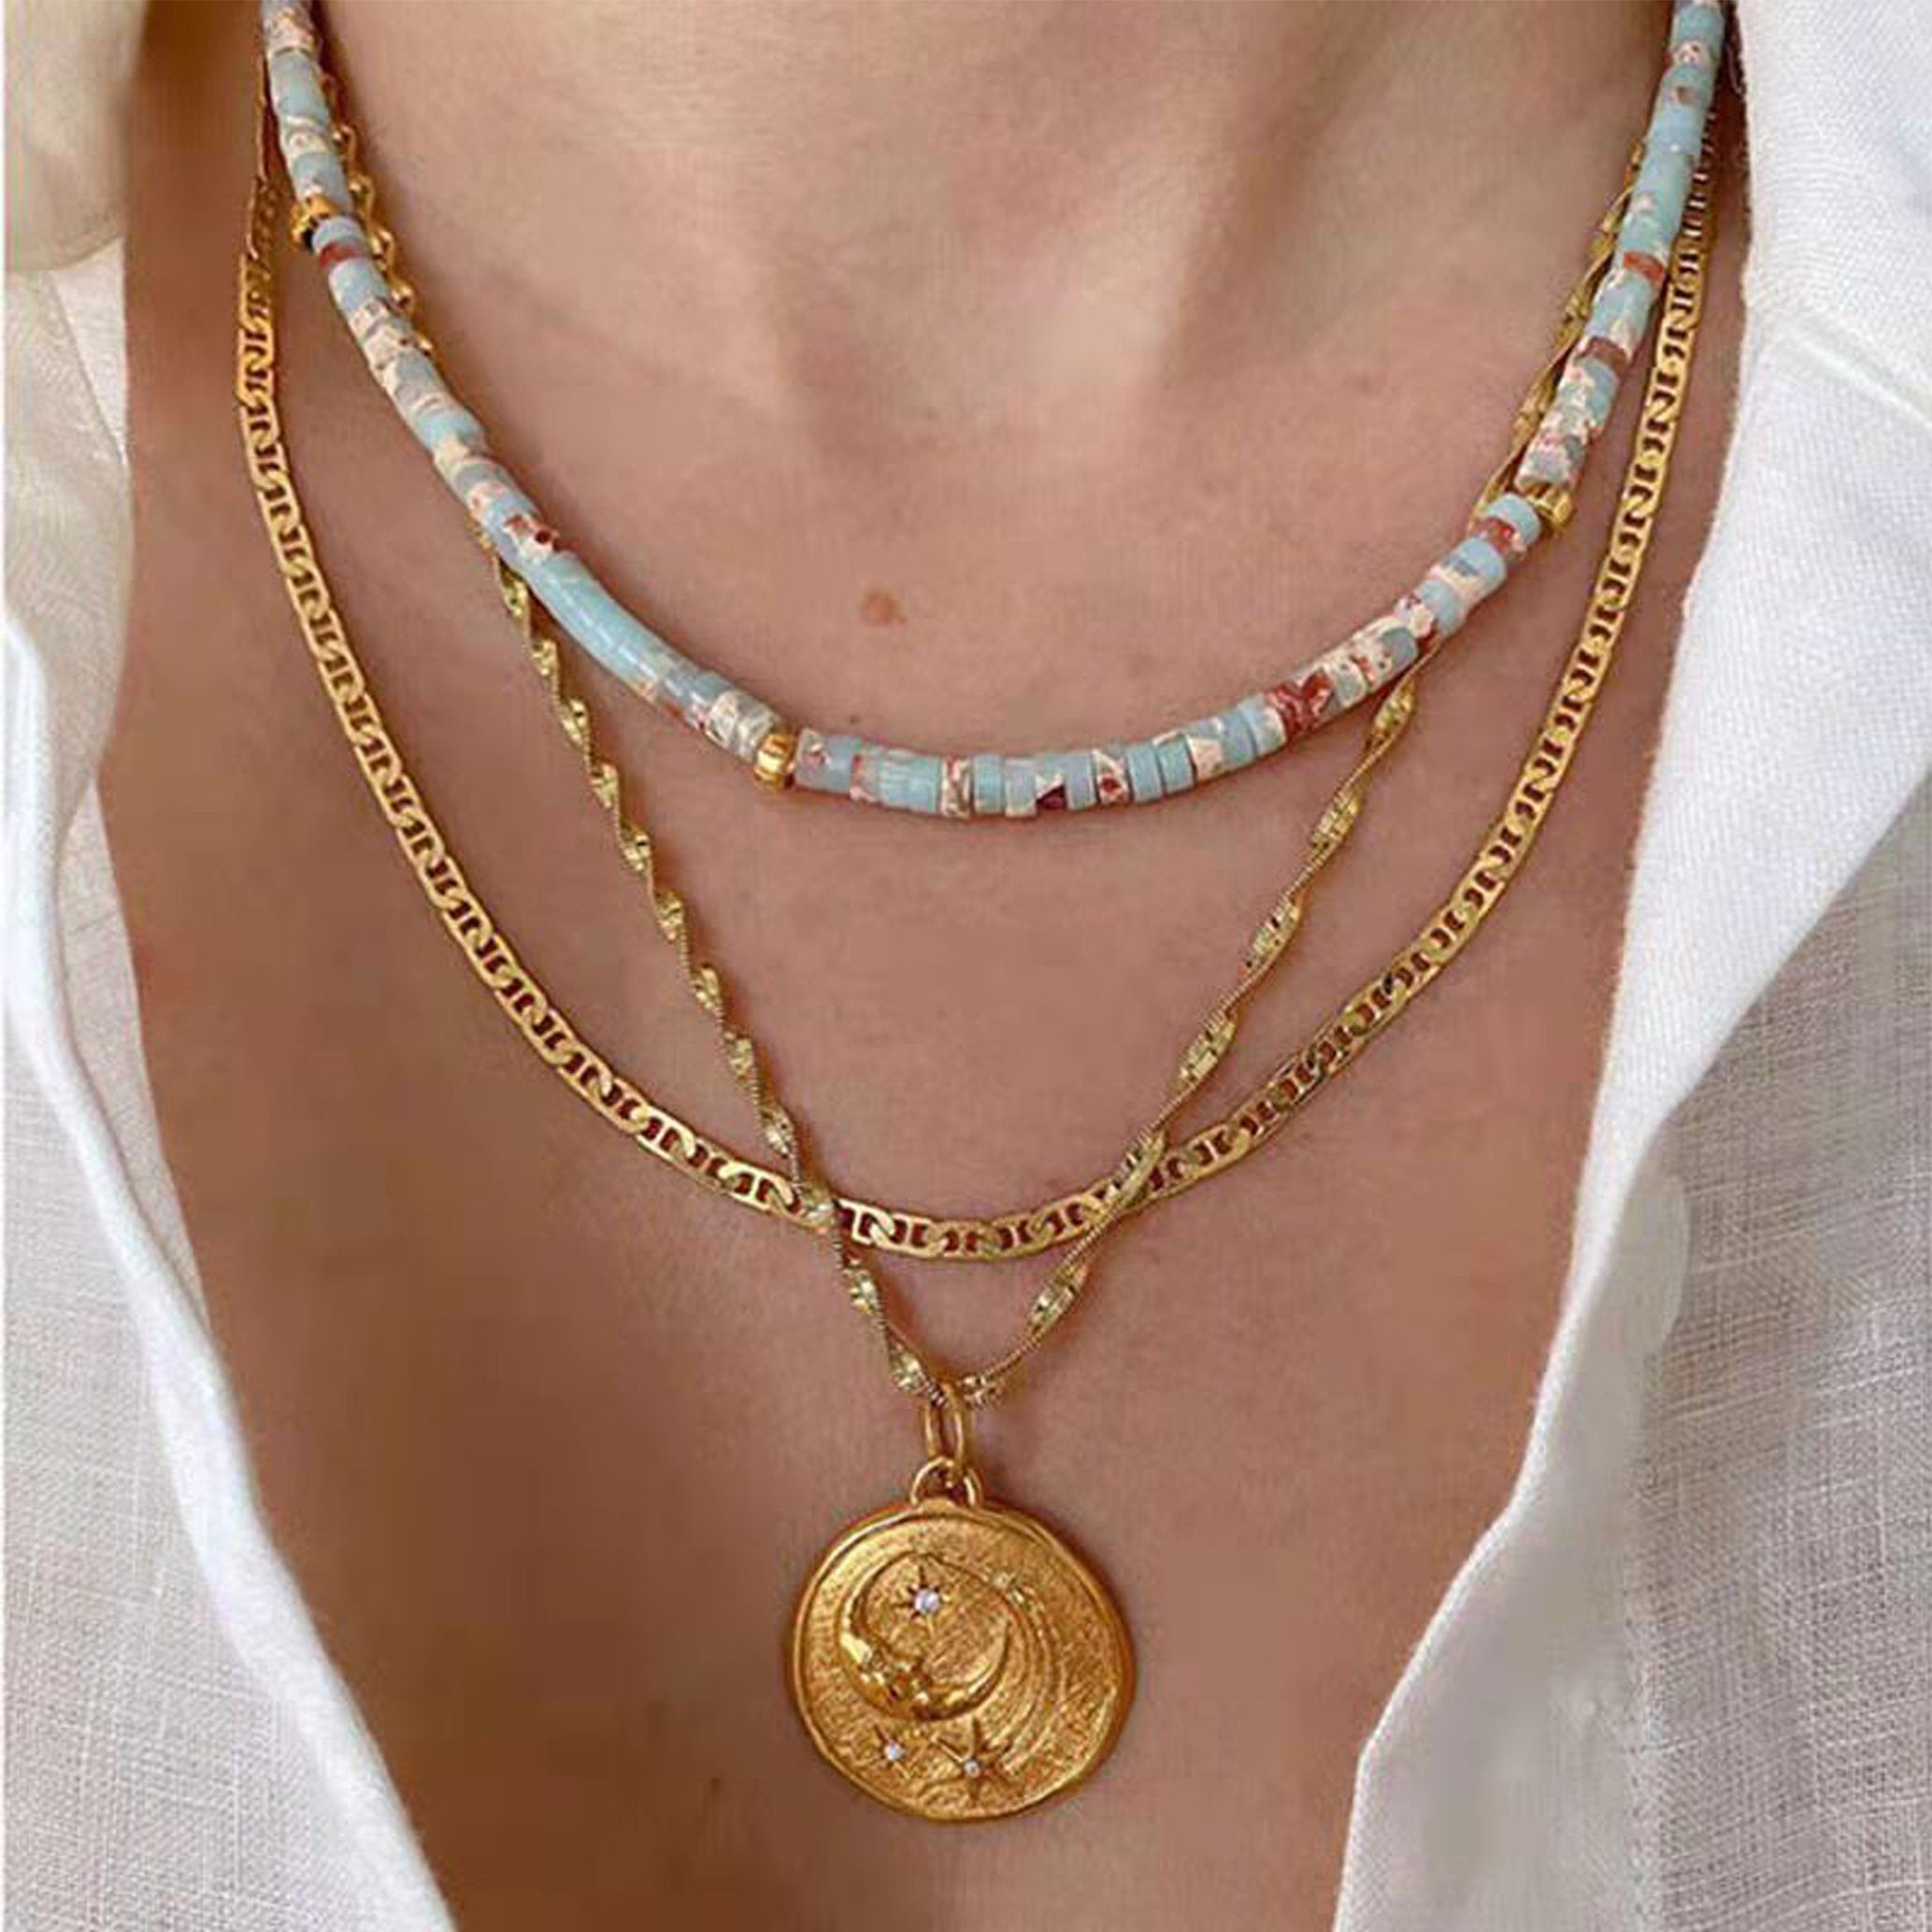 GOLDEN Charm-Kette Sommerliche Medusa Halskette aus Glasperlen, Edelsteinen 18K vergoldet Großer Luna Star